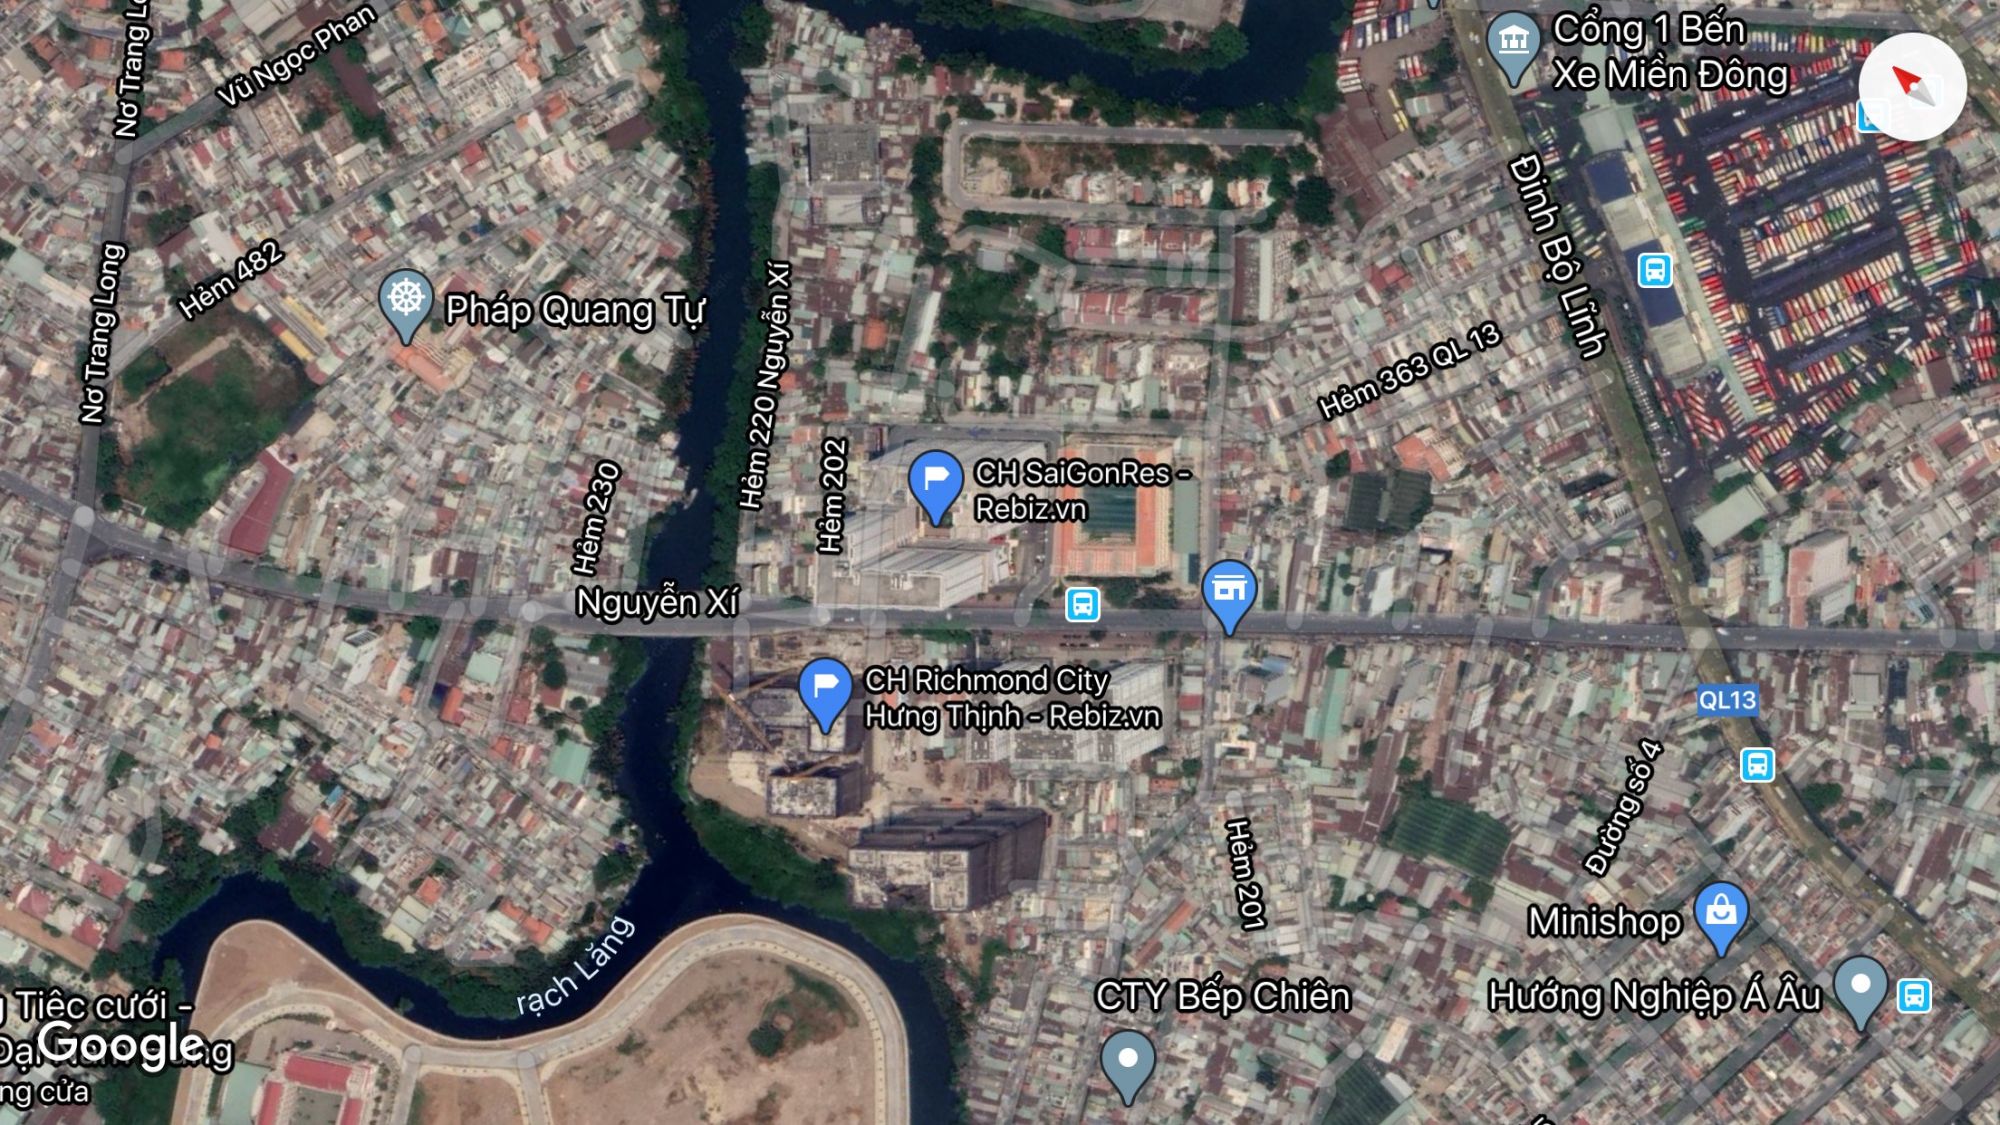 richmond city vi tri google maps